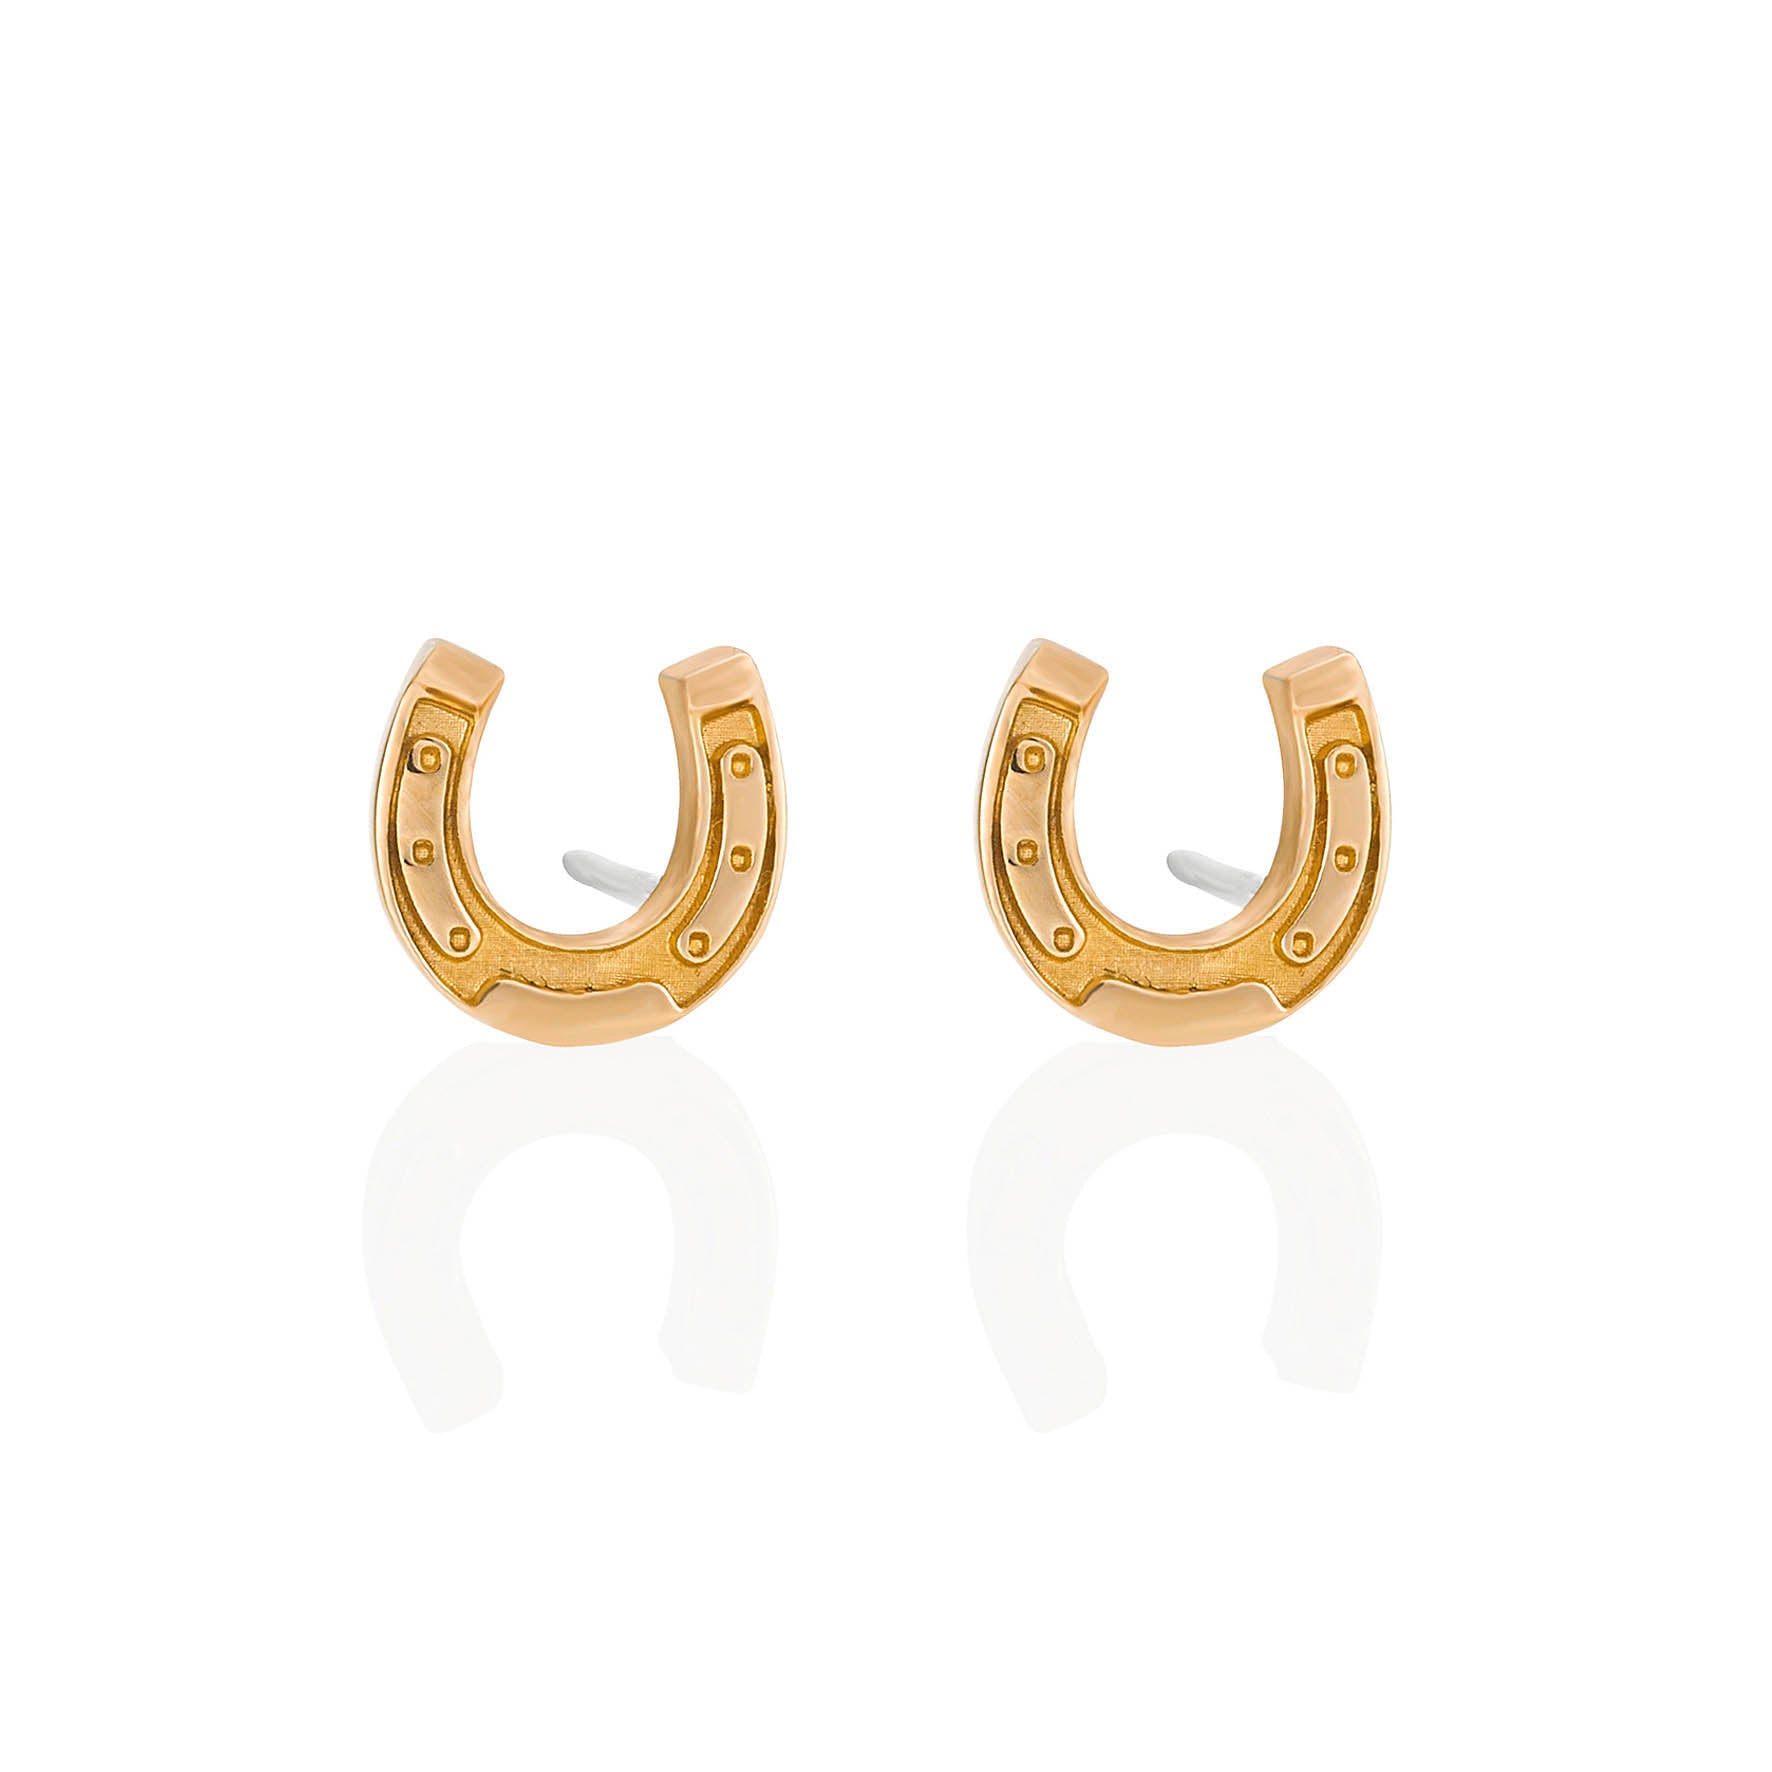 Horseshoe Stud earrings in 9ct Yellow Gold